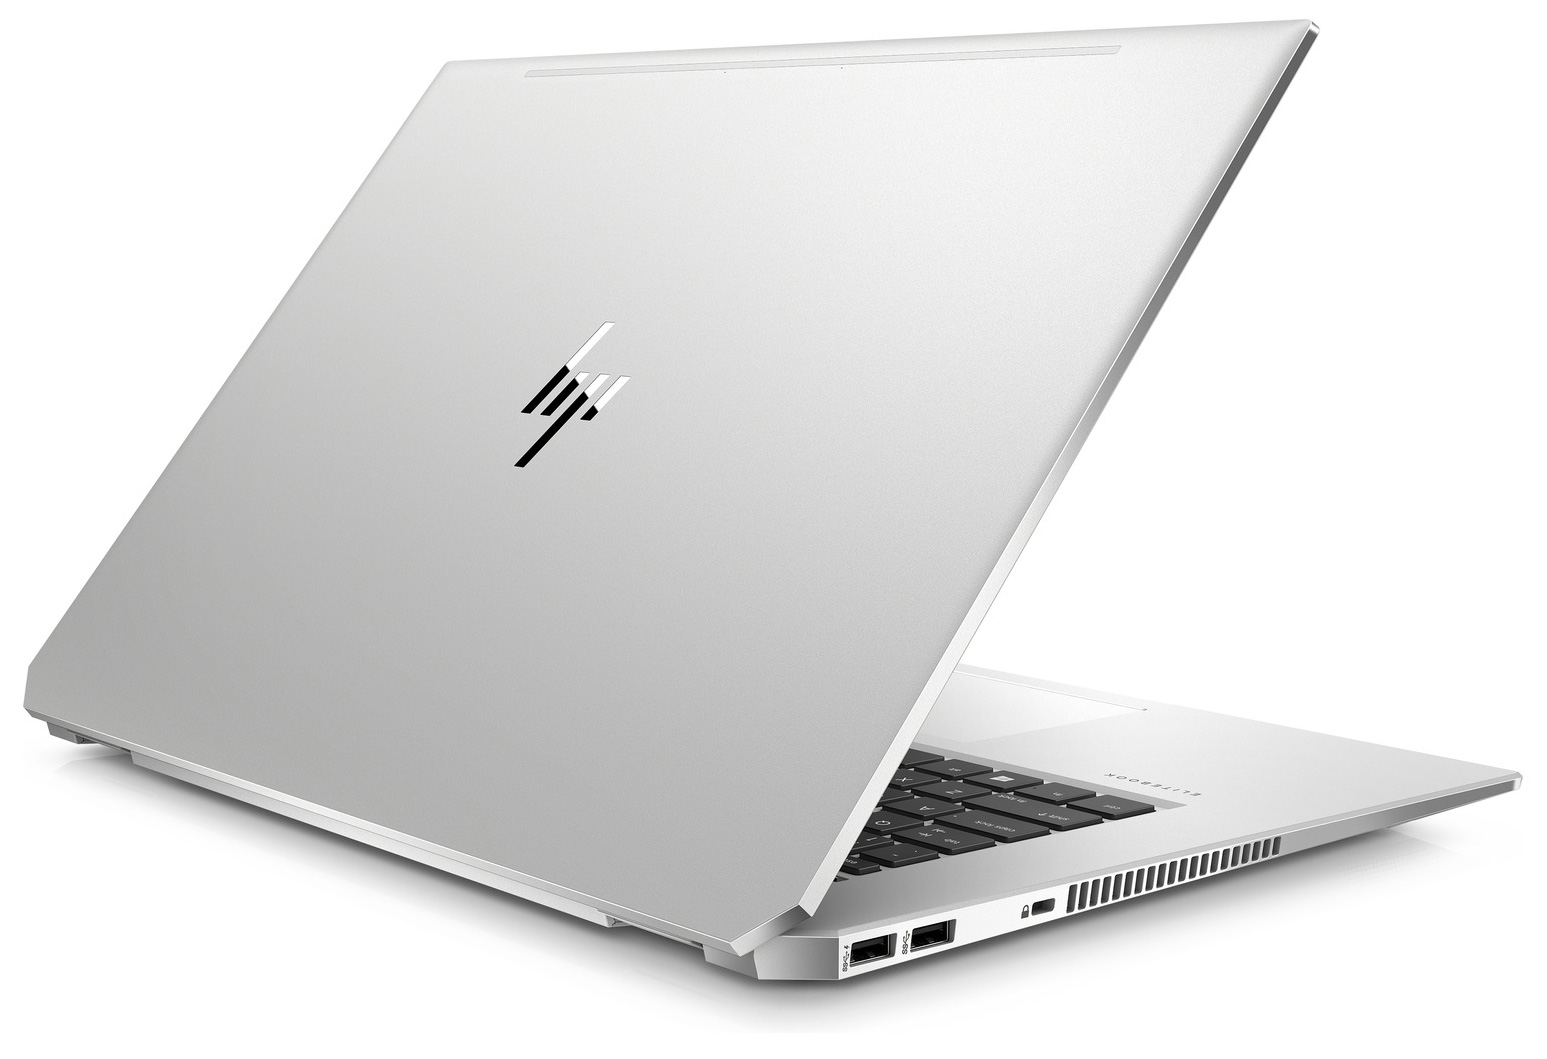 HP EliteBook 1050 G1 - Specs, Tests, and Prices | LaptopMedia.com